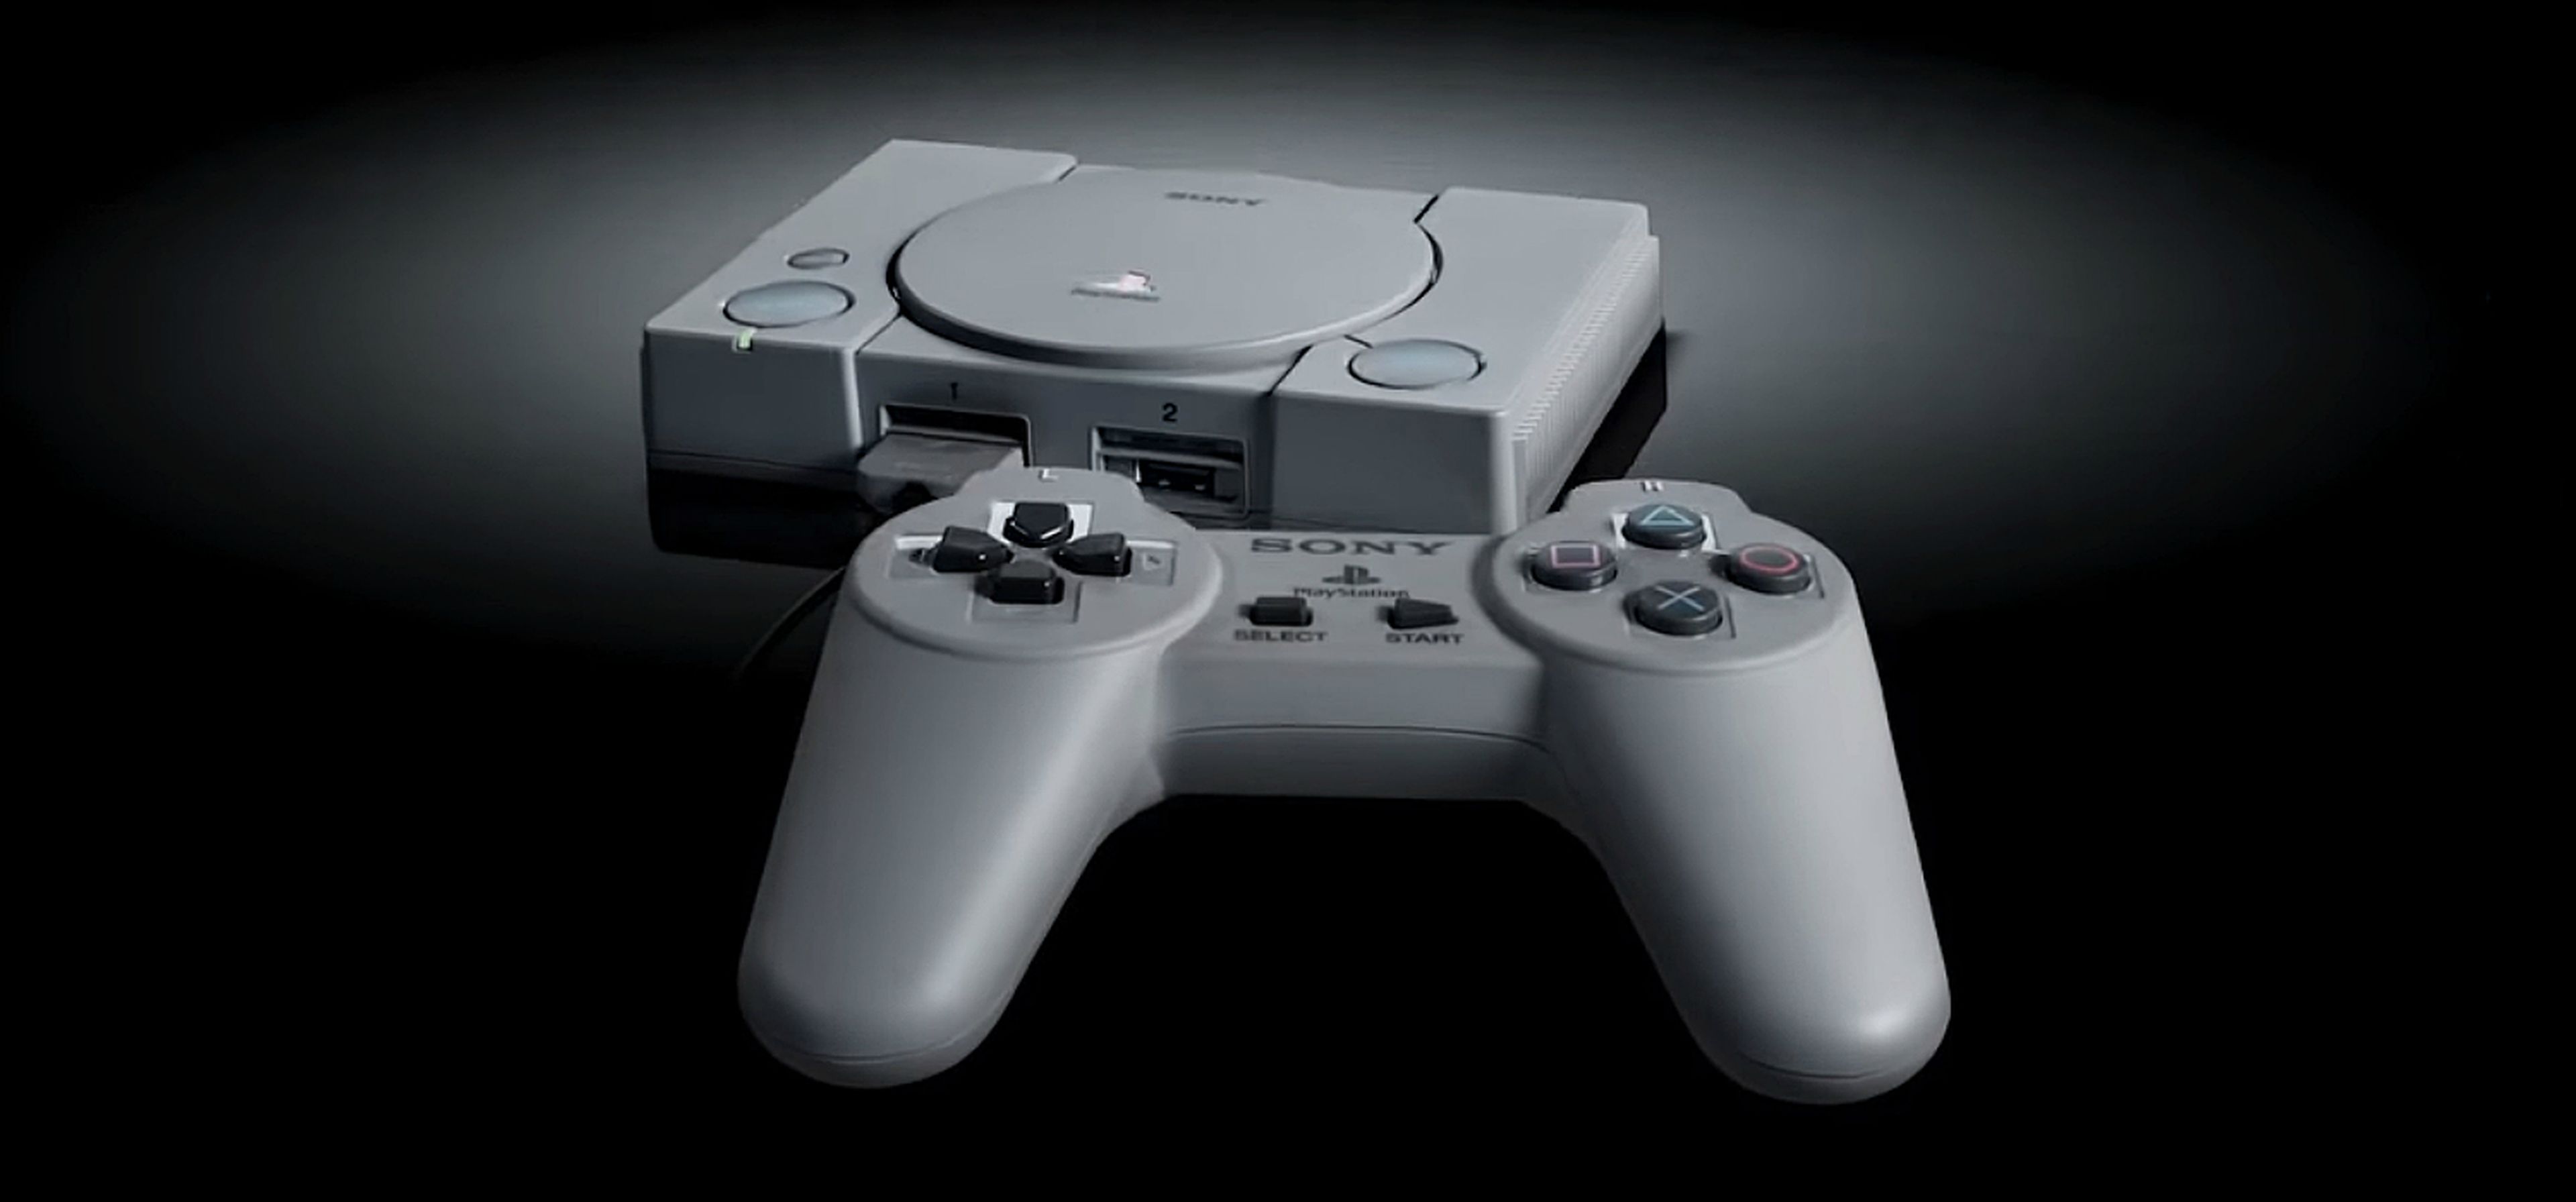 PlayStation Classic mini - Impresiones y comparativa con PS1